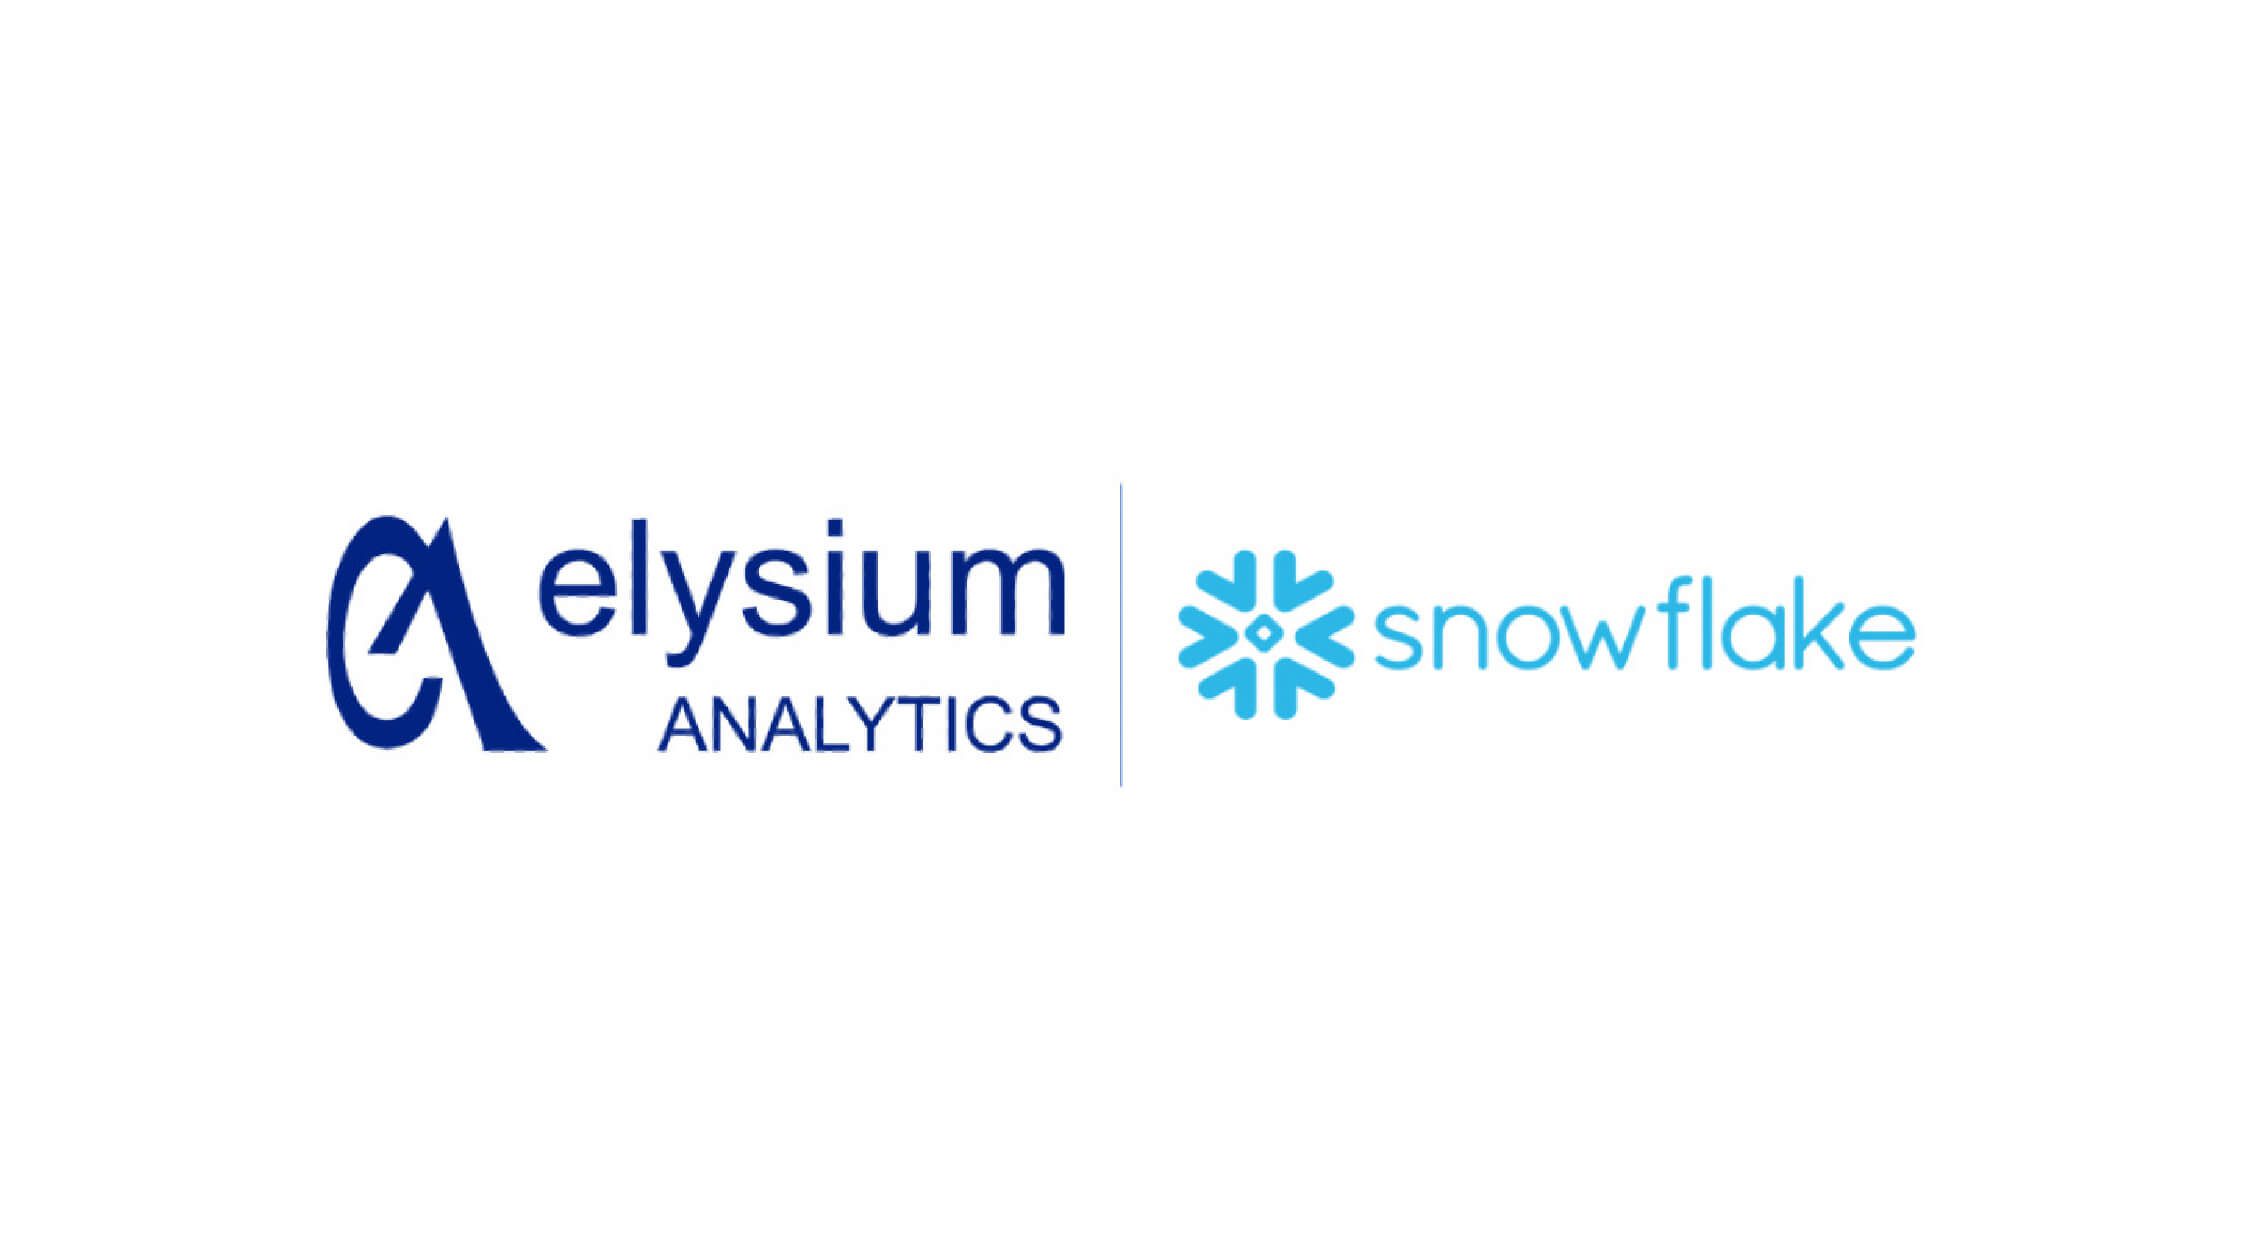 elysium analytics and snowflake partnership